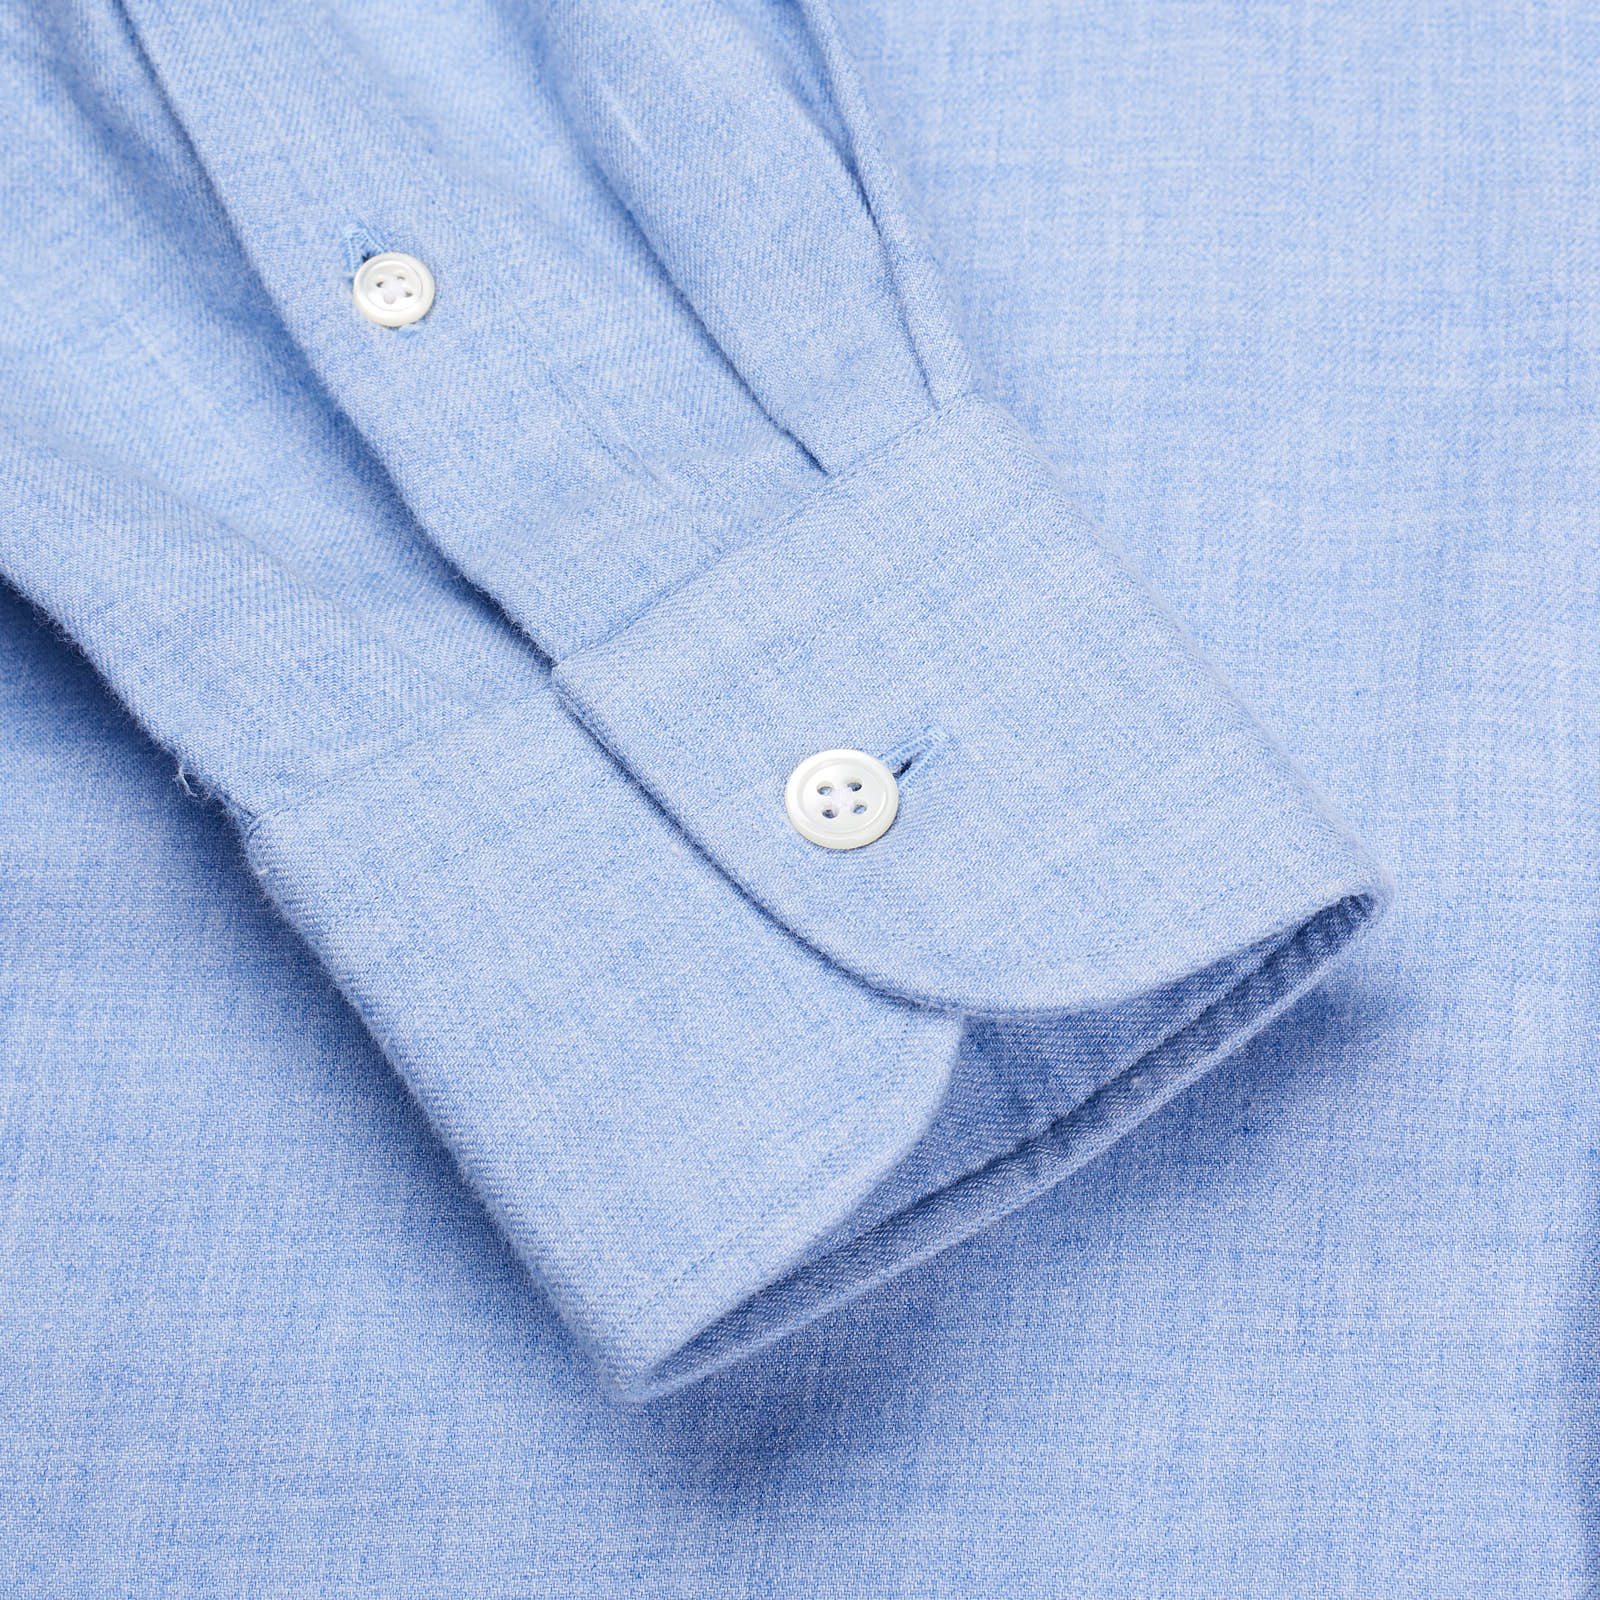 ANDERSON & SHEPPARD Handmade Blue Cotton-Cashmere Dress Shirt EU 41 US 16 ANDERSON & SHEPPARD